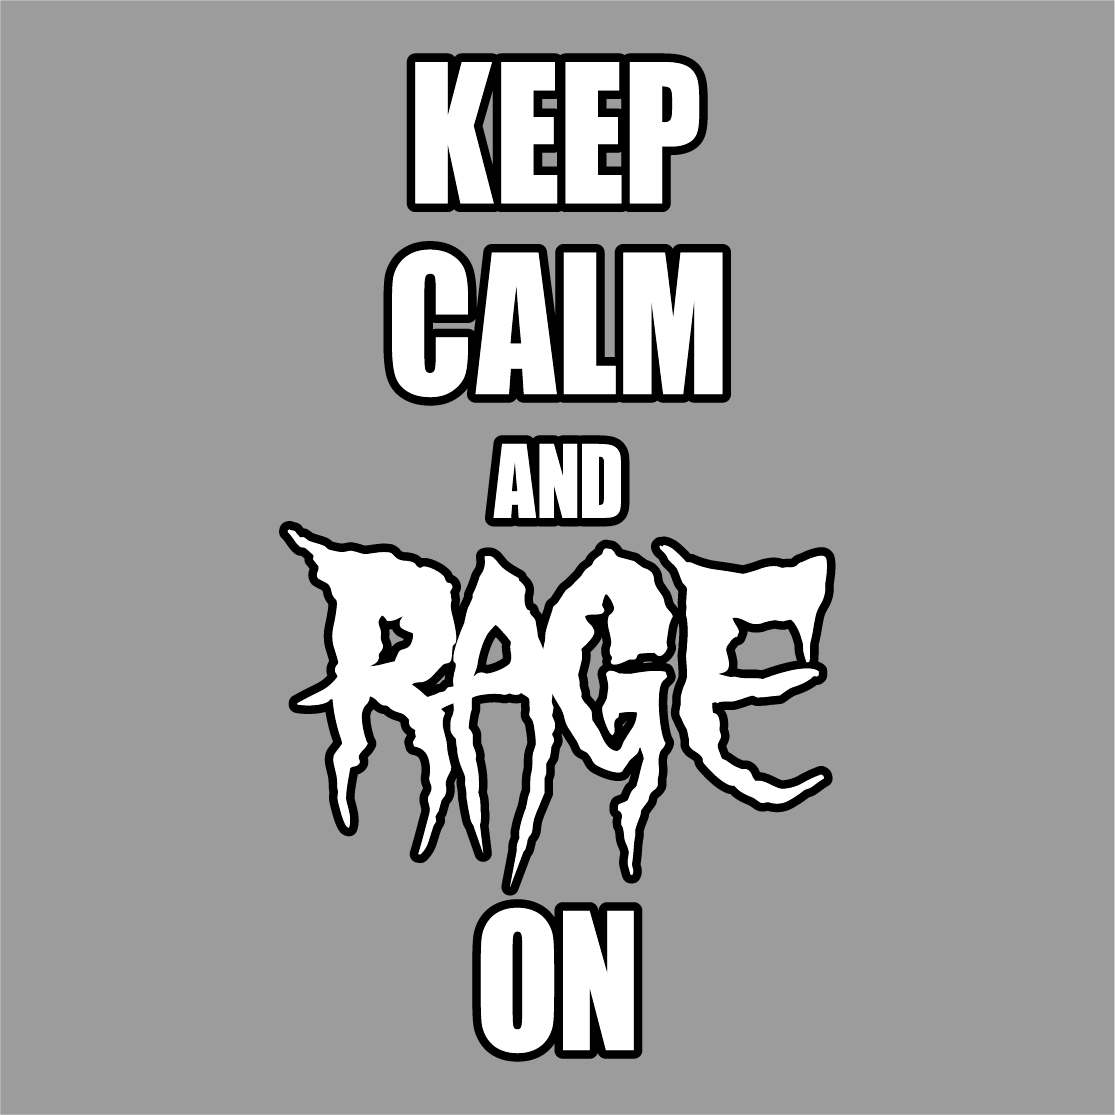 Chesapeake Rage T-Shirts shirt design - zoomed